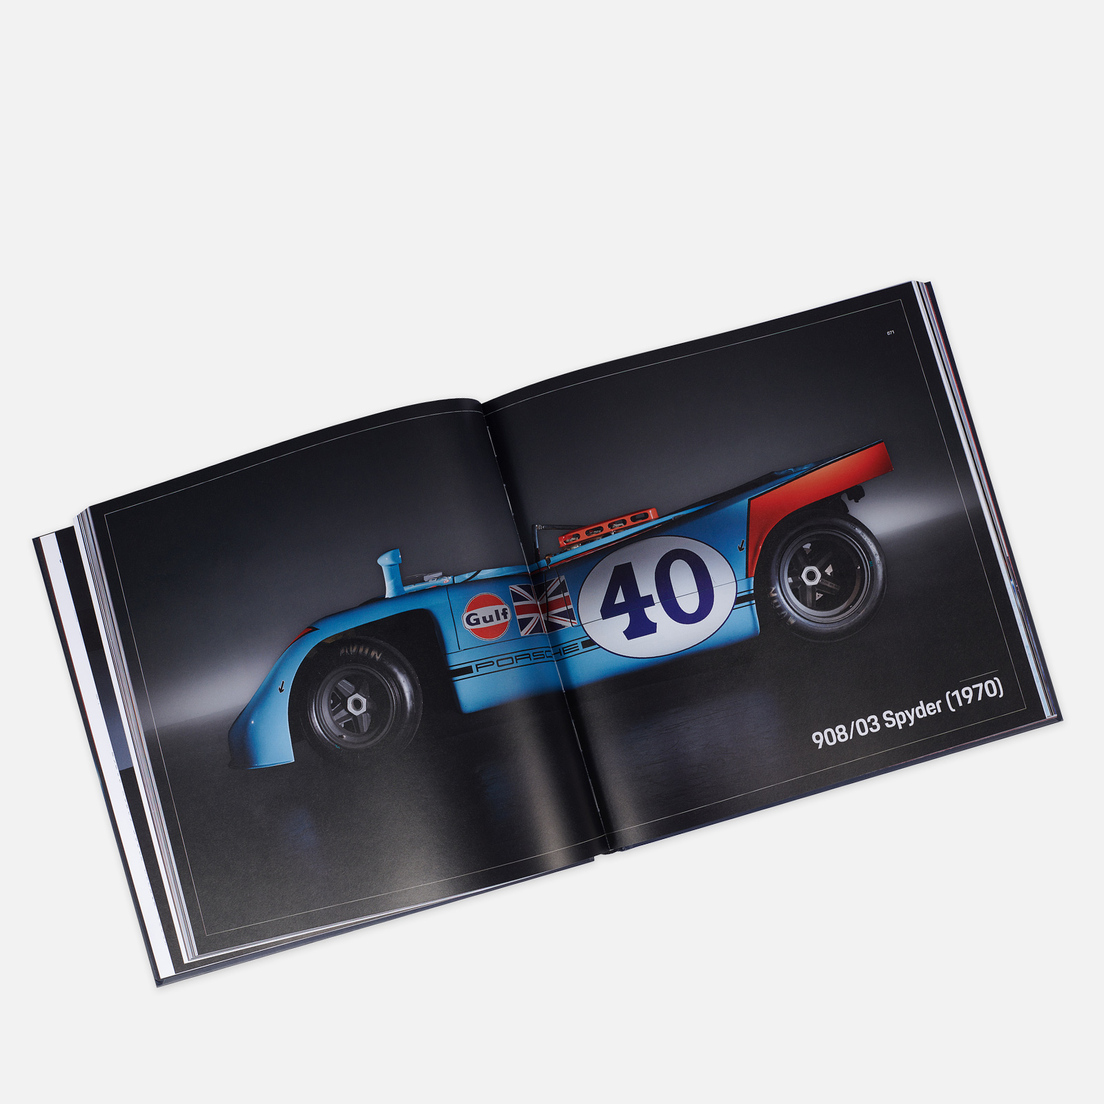 Delius Klasing Книга Porsche Legends